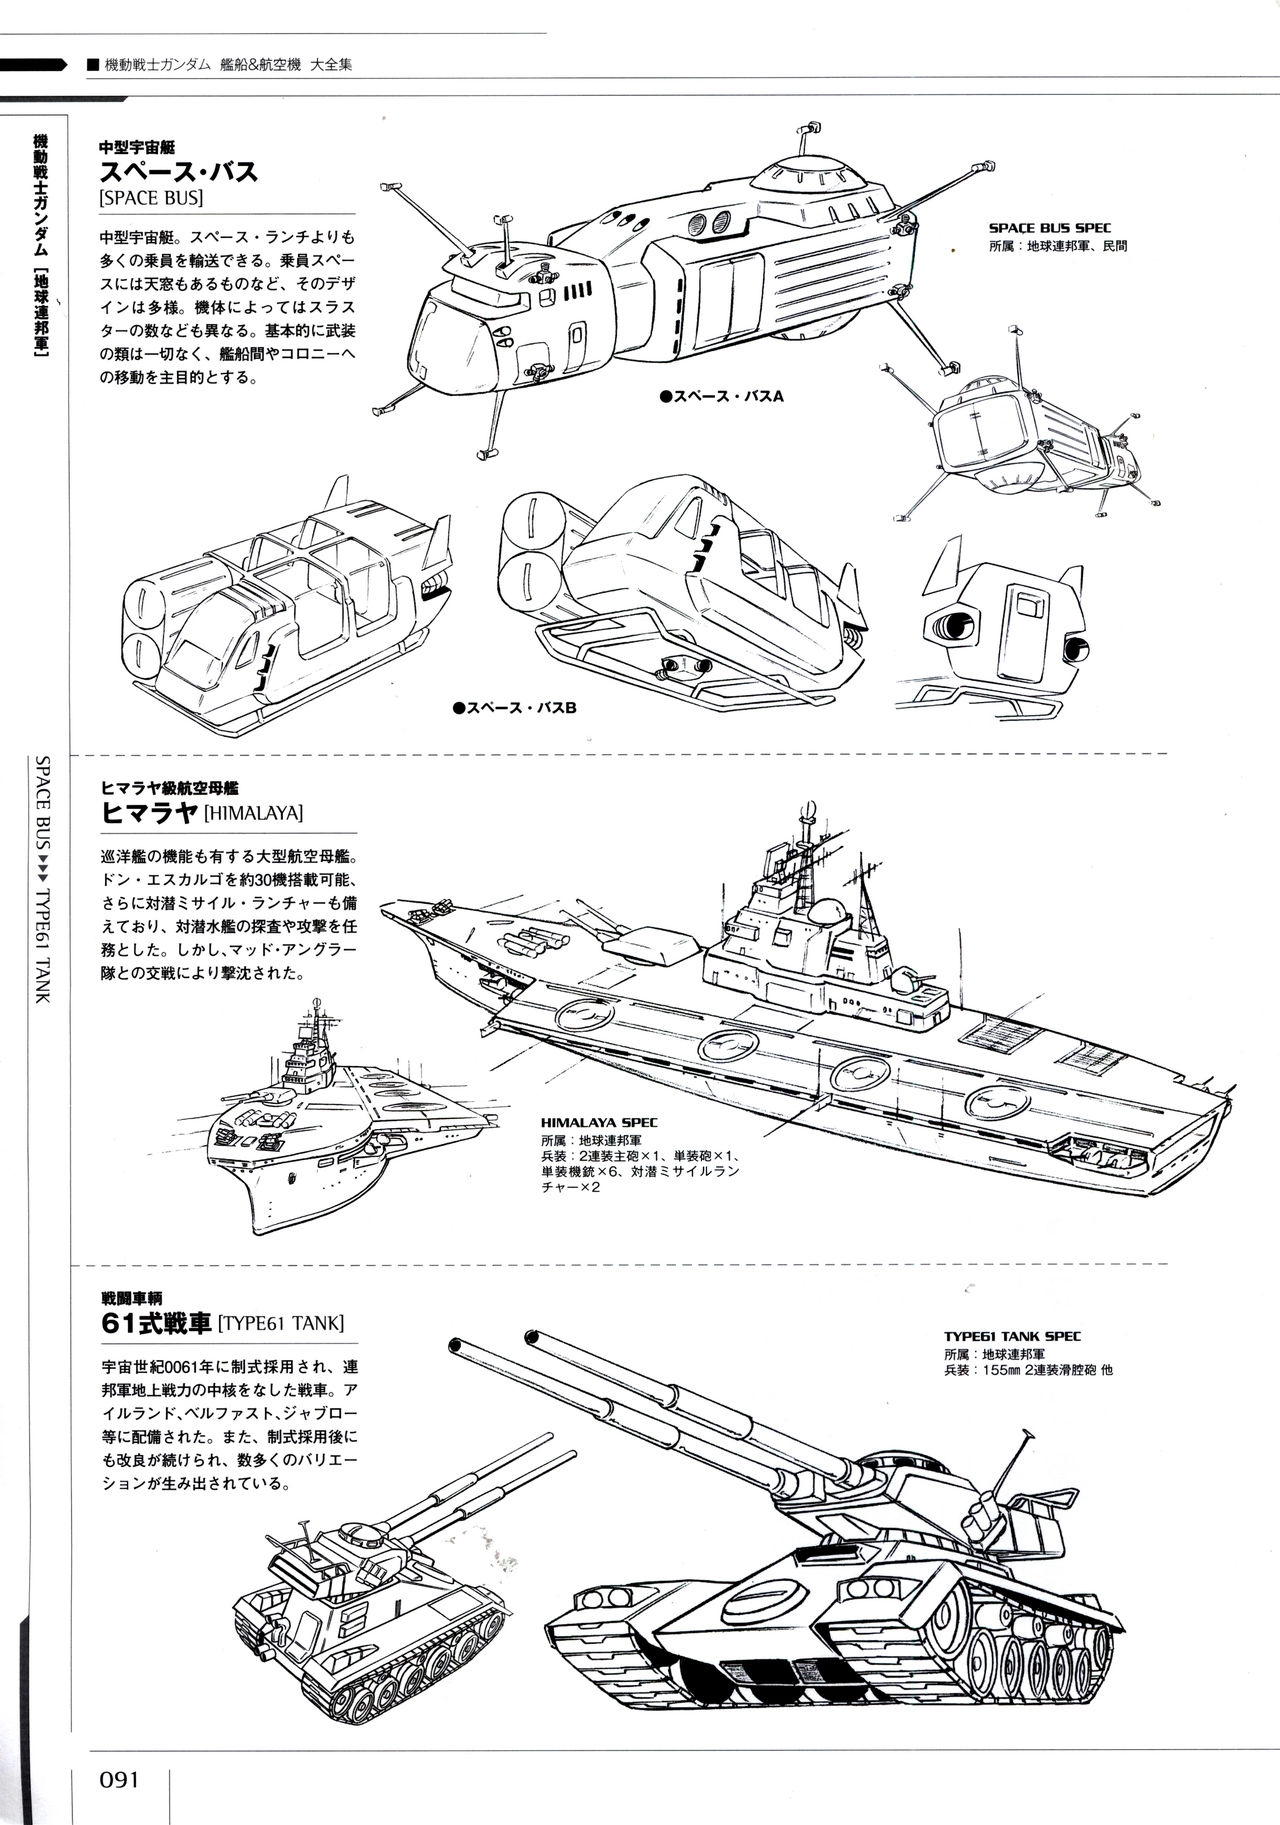 Mobile Suit Gundam - Ship & Aerospace Plane Encyclopedia - Revised Edition 96